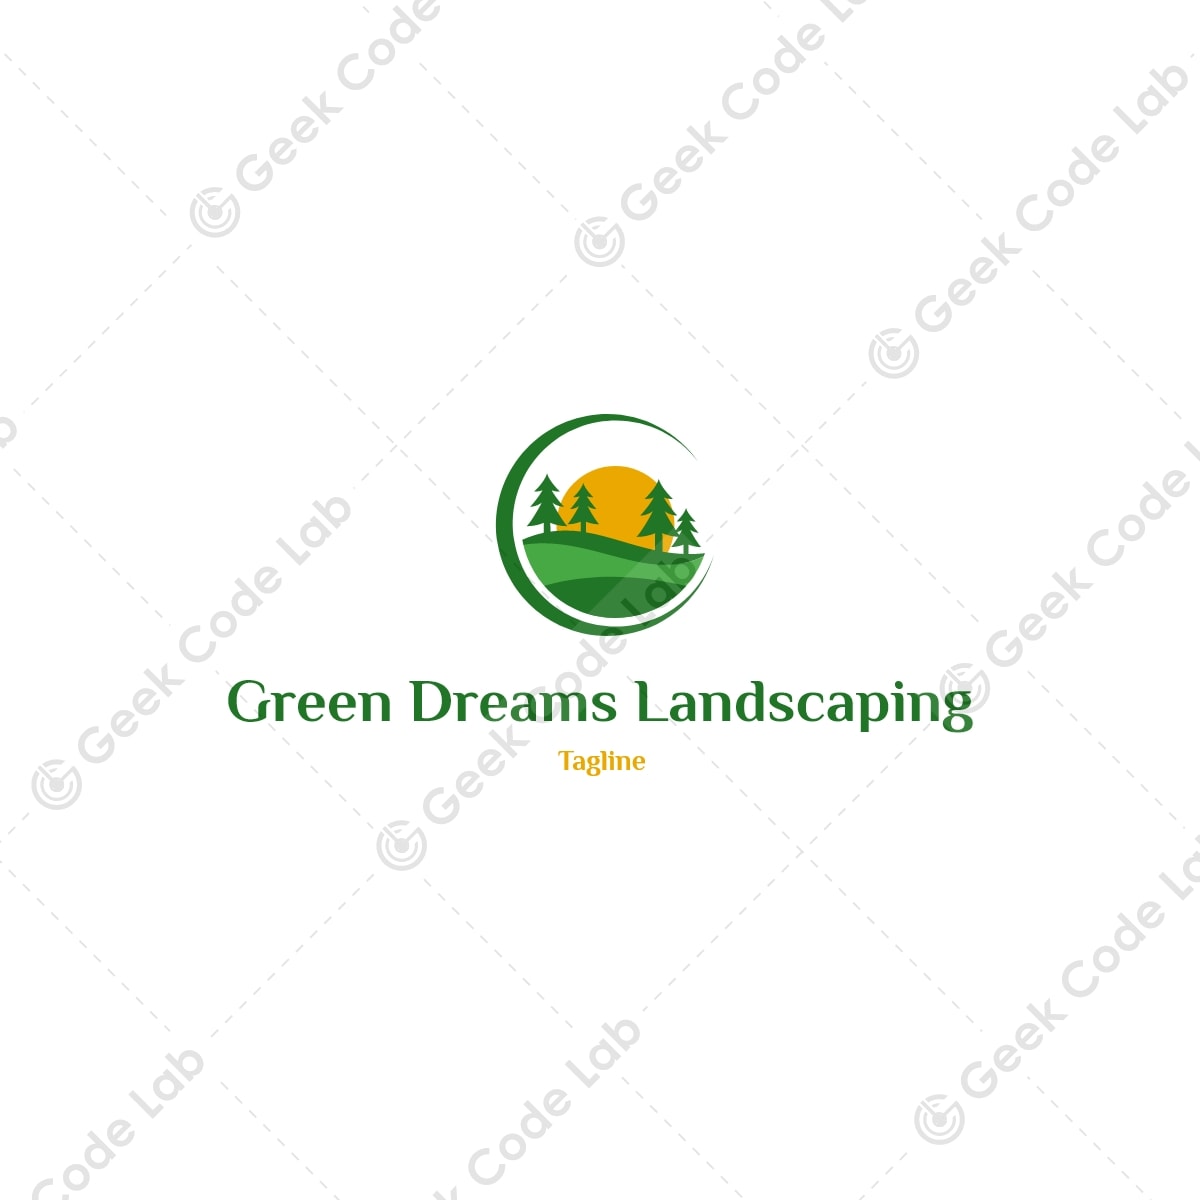 Green Dreams Landscaping